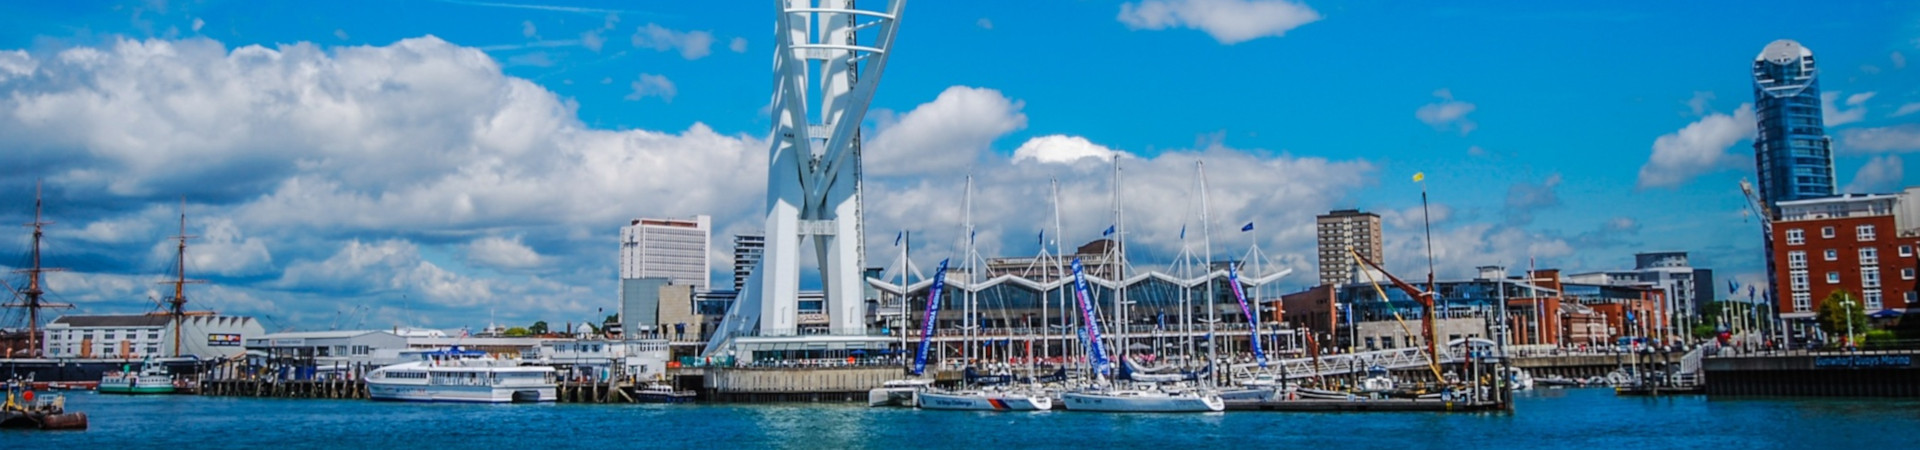 Imagen recurso del puerto de destino Portsmouth para la ruta en ferry Cherbourg - Portsmouth